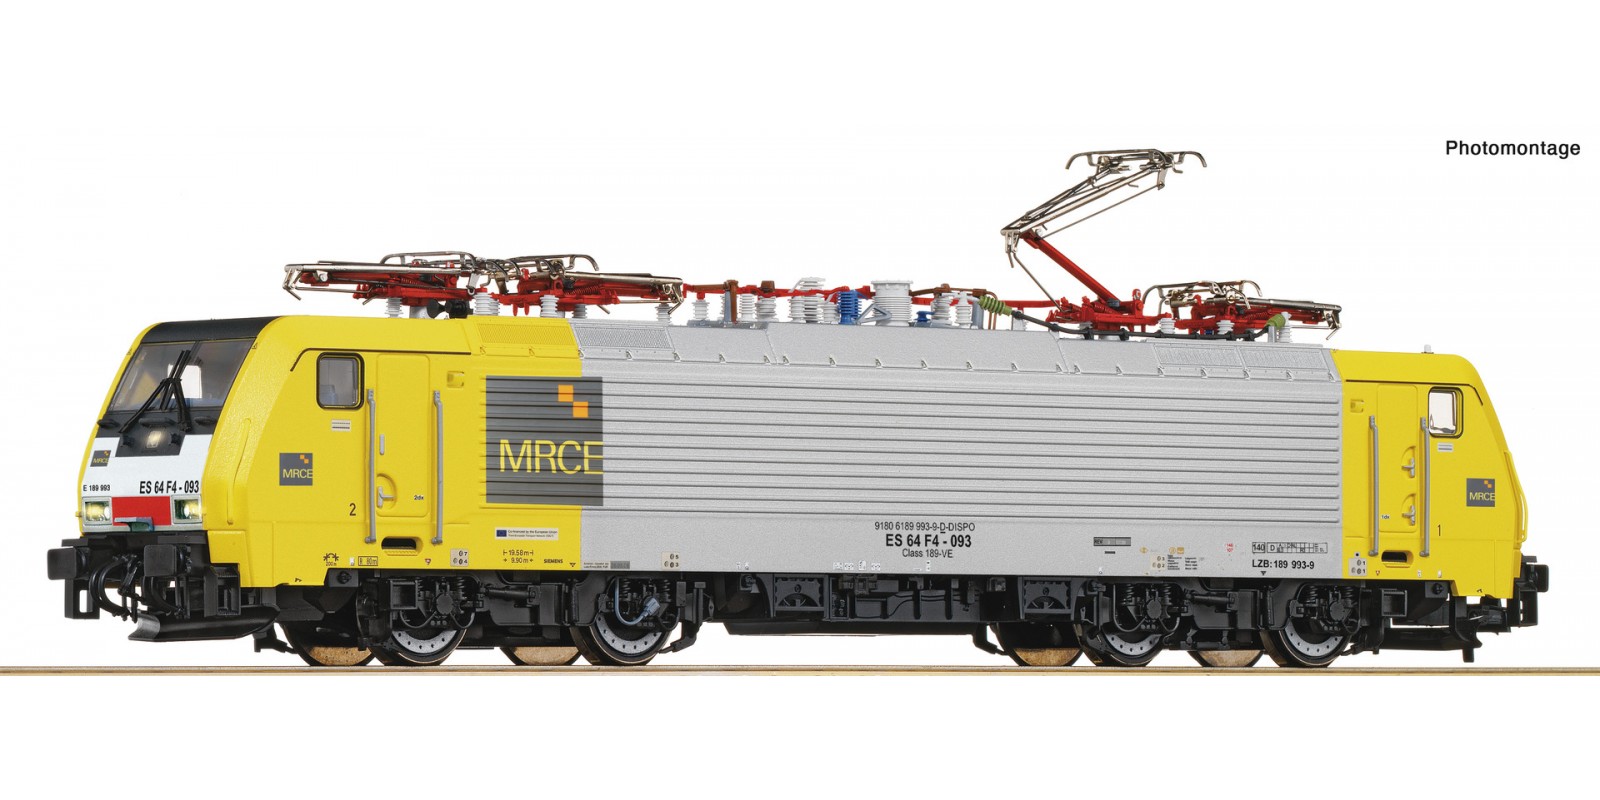 RO7510019 Electric locomotive 189 993-9, MRCE/SBB CI